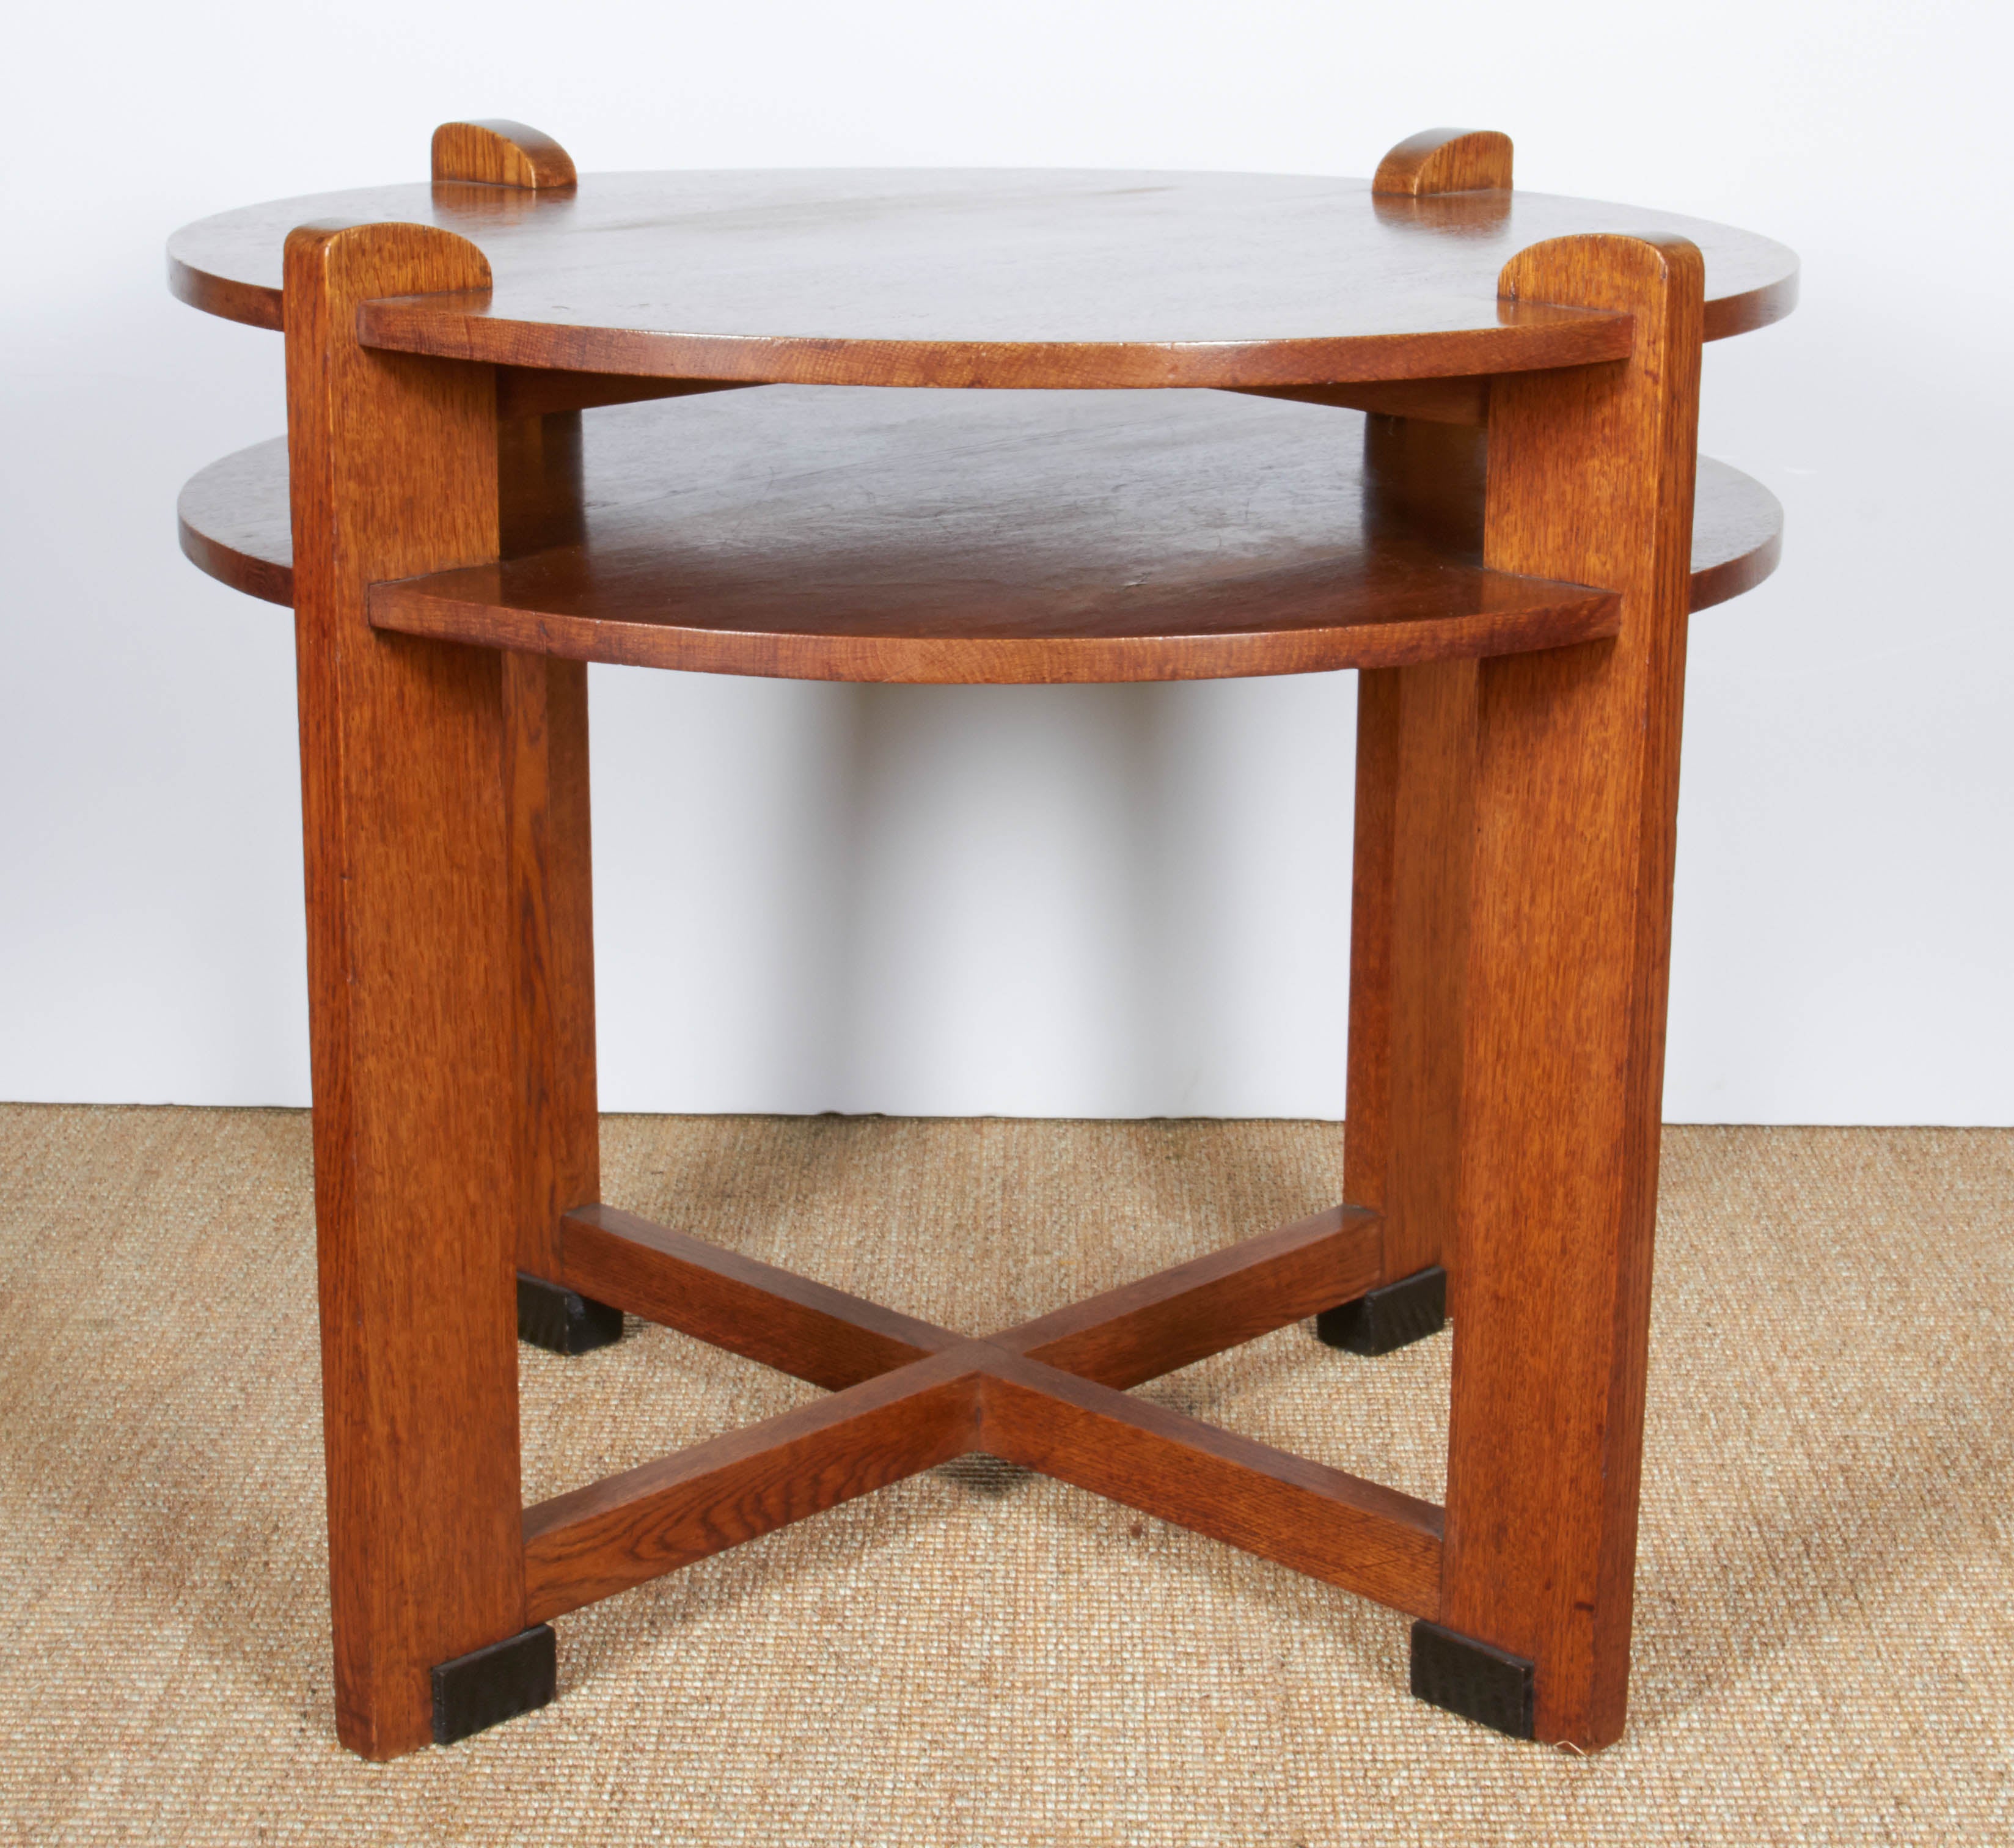 1930s Dutch Modernist Oak Side Table with Shelf